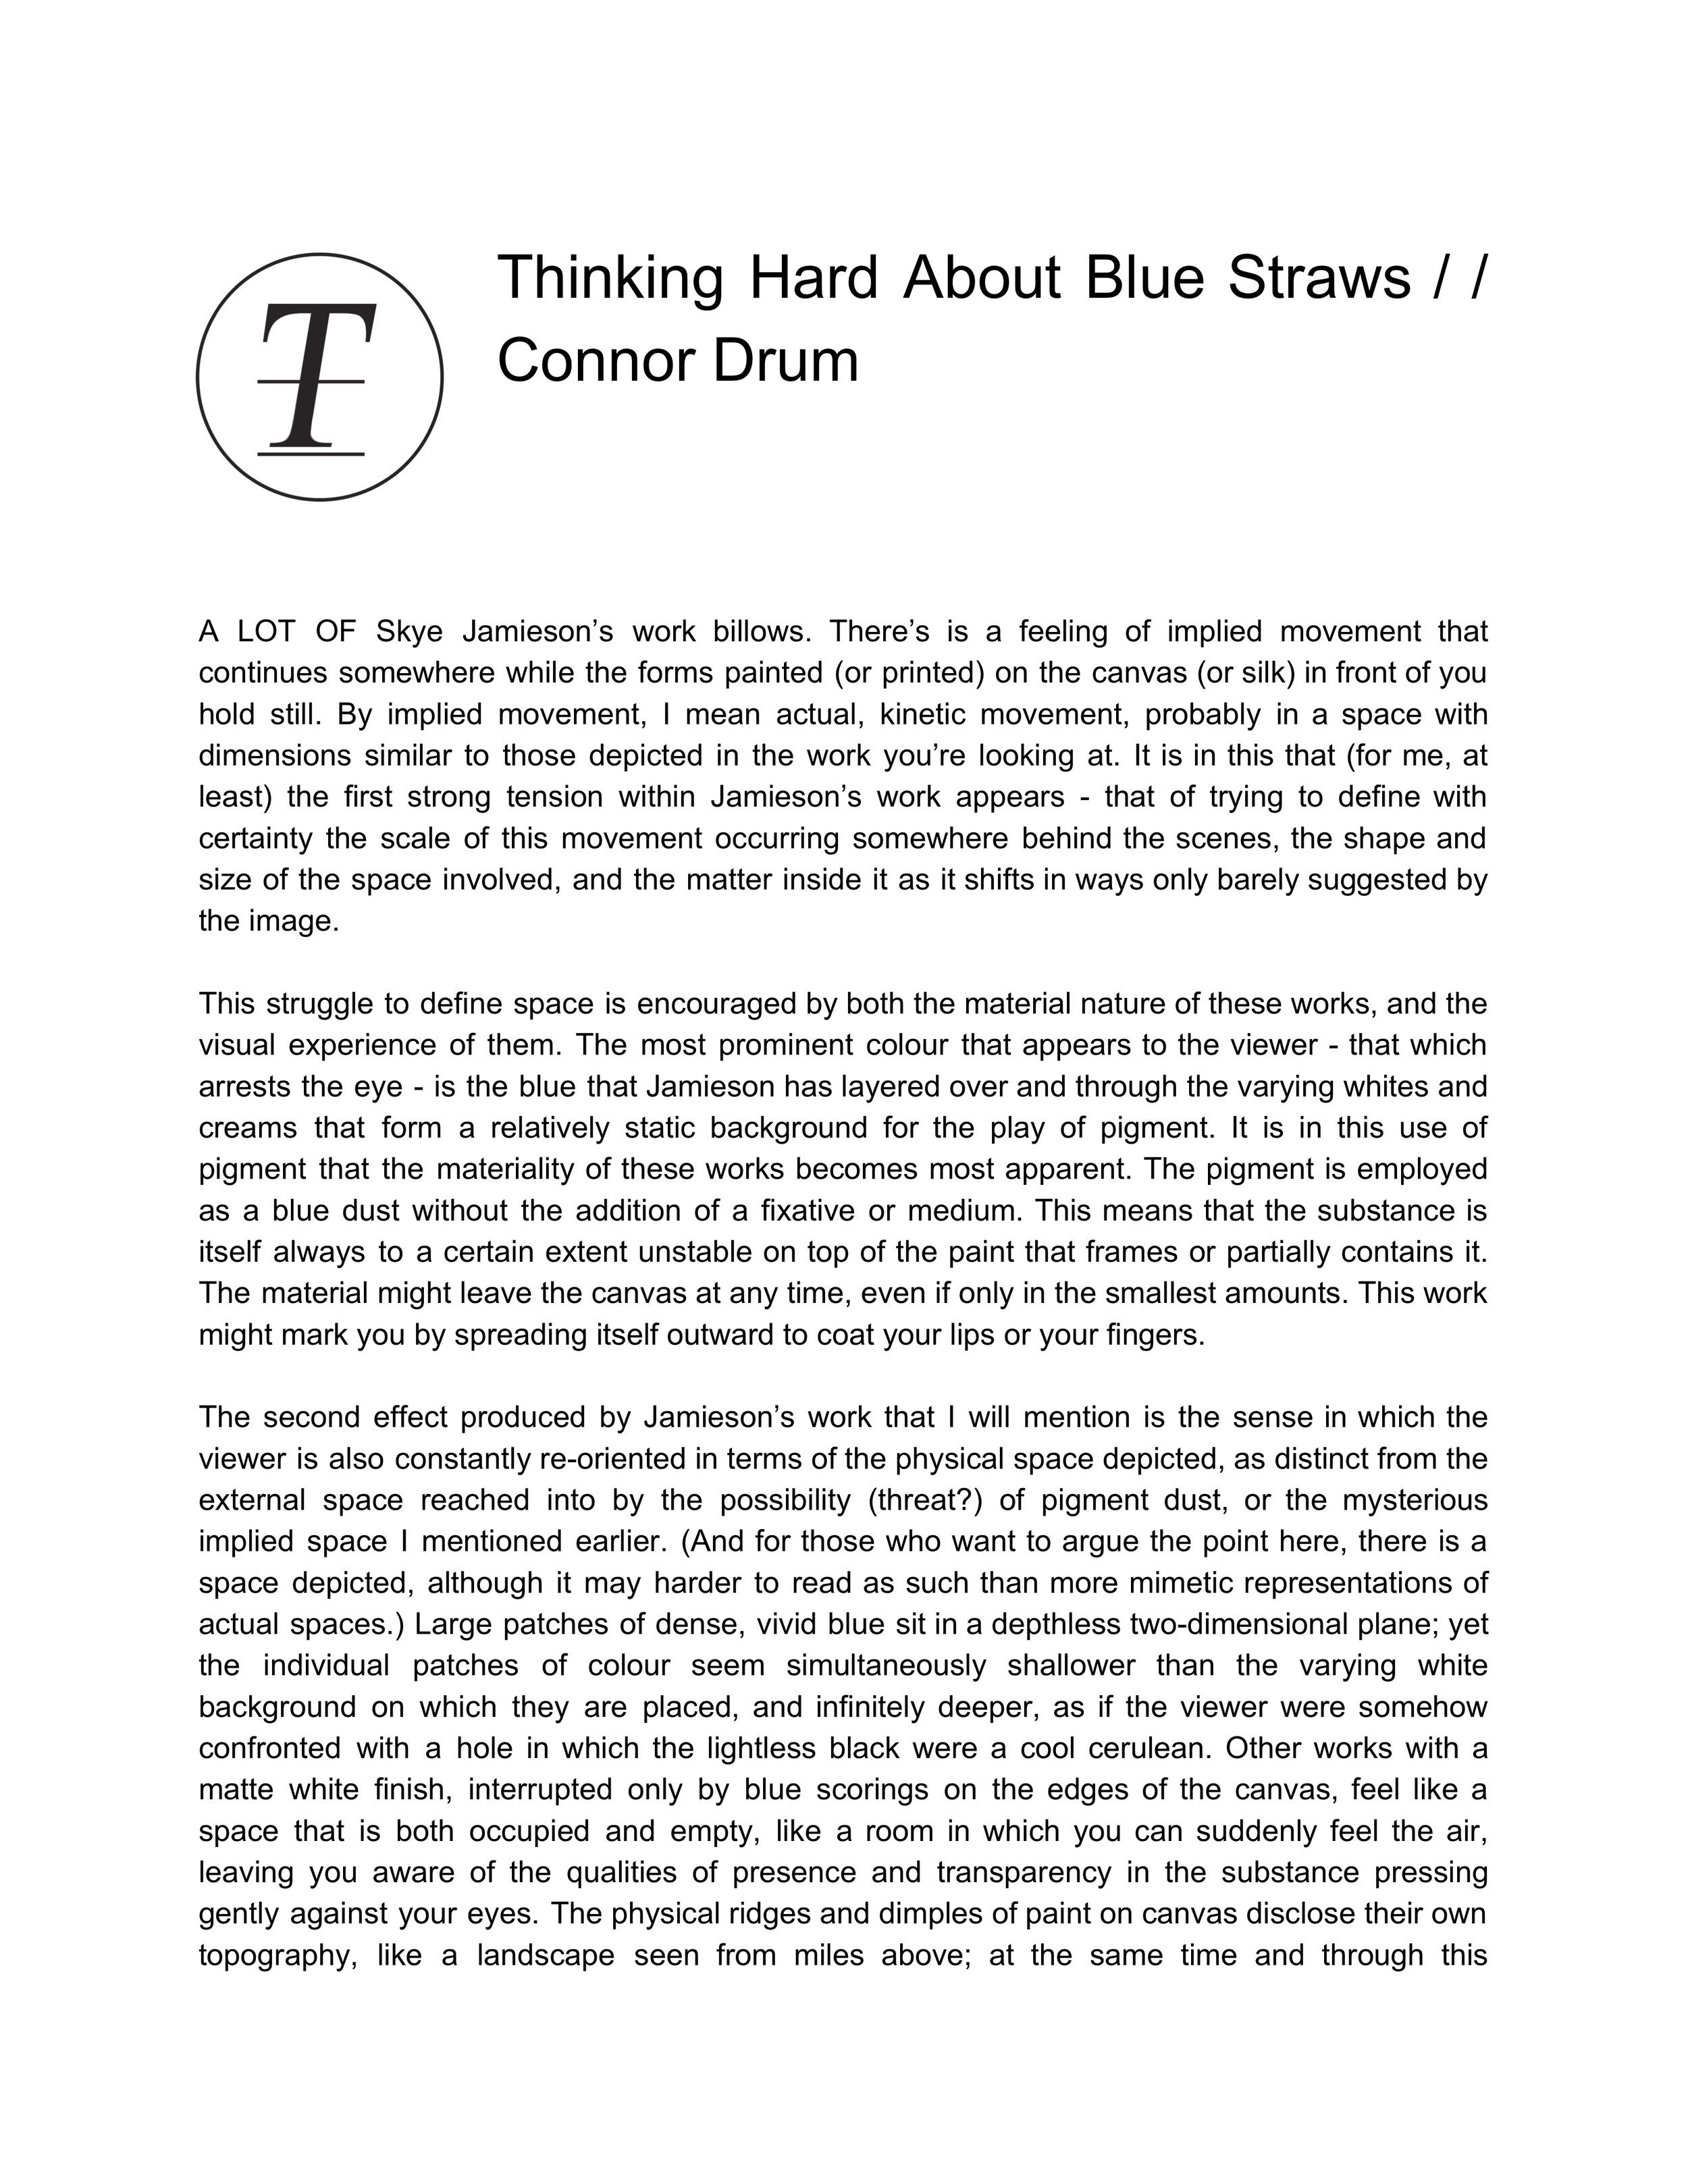 Thinking+Hard+About+Blue+Straws-Connor+Drum.jpg